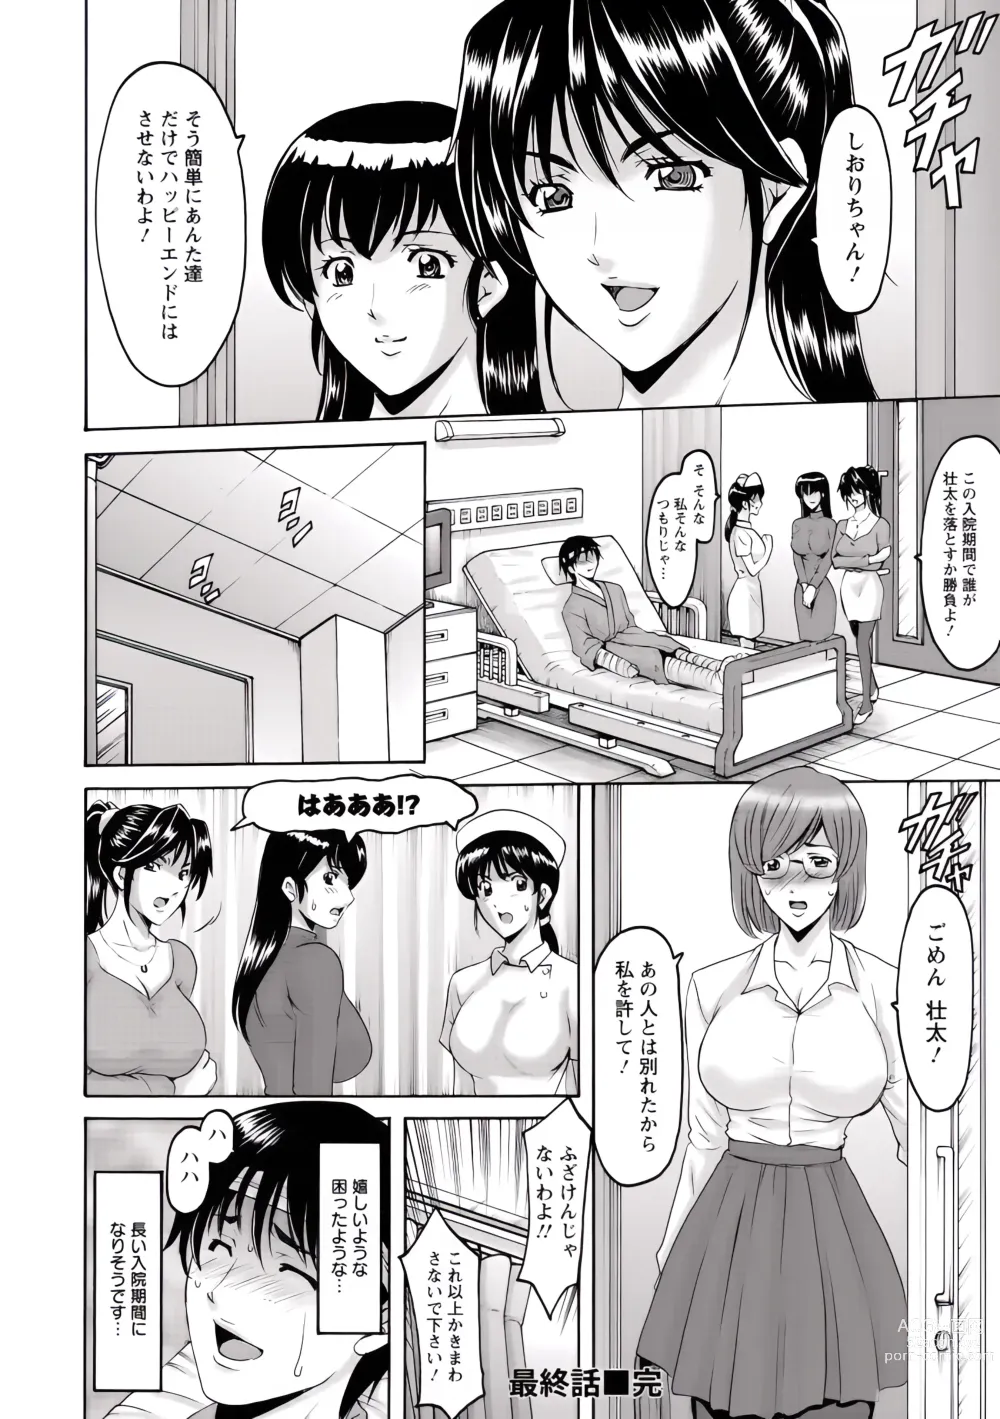 Page 187 of manga Oshikake Byouin Netorare-ka (uncensored)